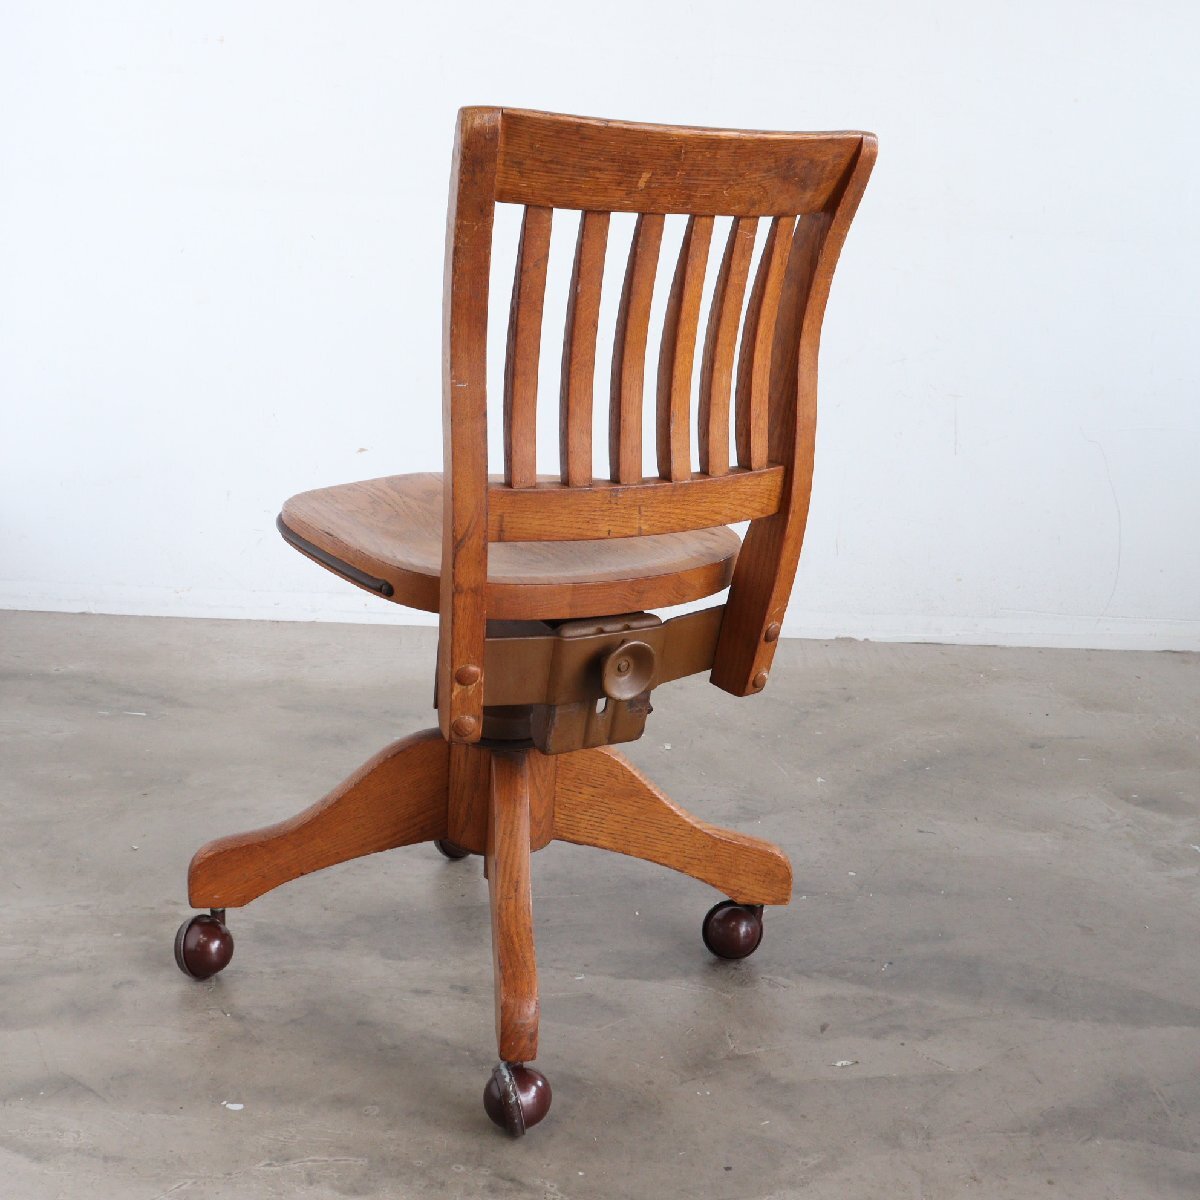 40s 50s アメリカ ヴィンテージ デスクチェア / アンティーク 木製 椅子 チェア 店舗什器 オーク材 USA インテリア #510-40-149-419_画像7